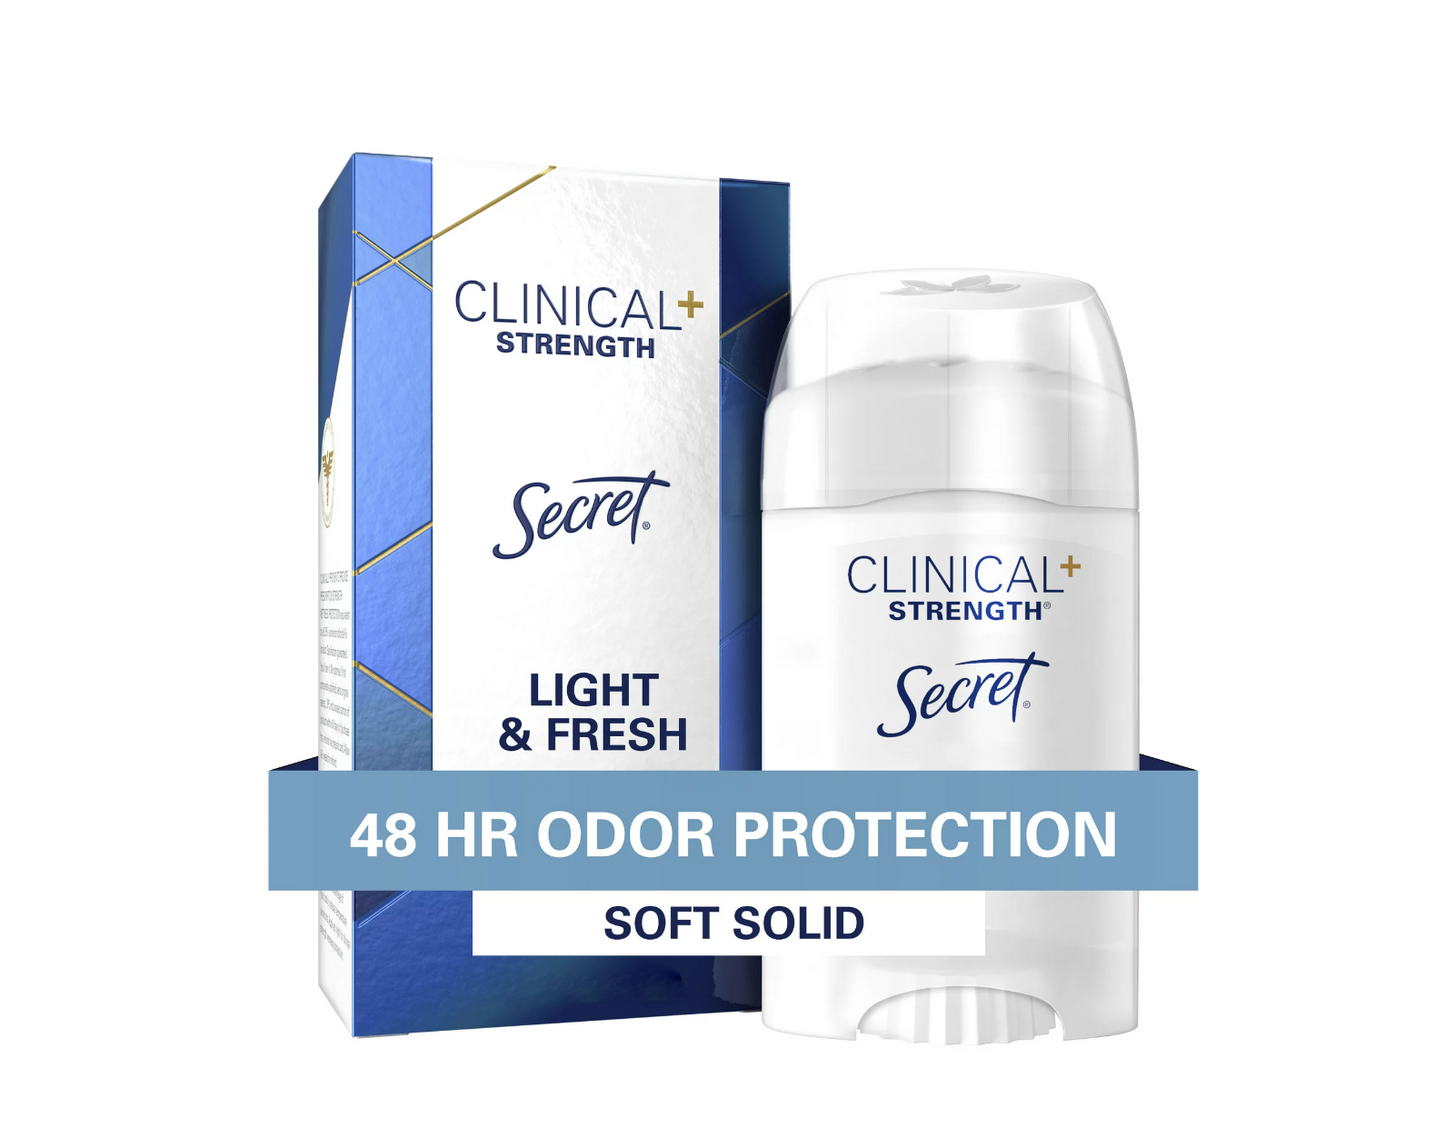 Secret Clinical Strength Soft Solid Antiperspirant and Deodorant, Light & Fresh